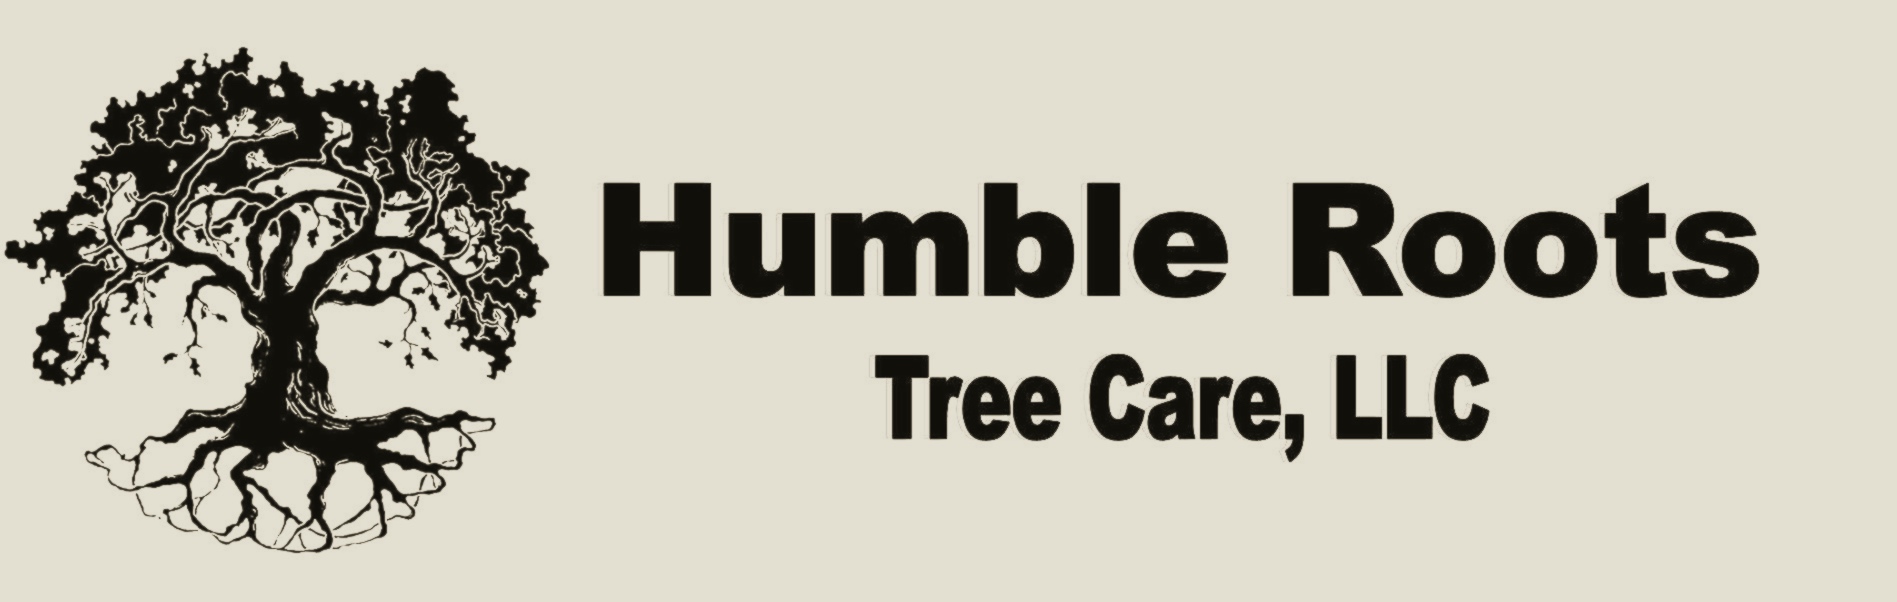 Humble Roots Tree Care Ohio